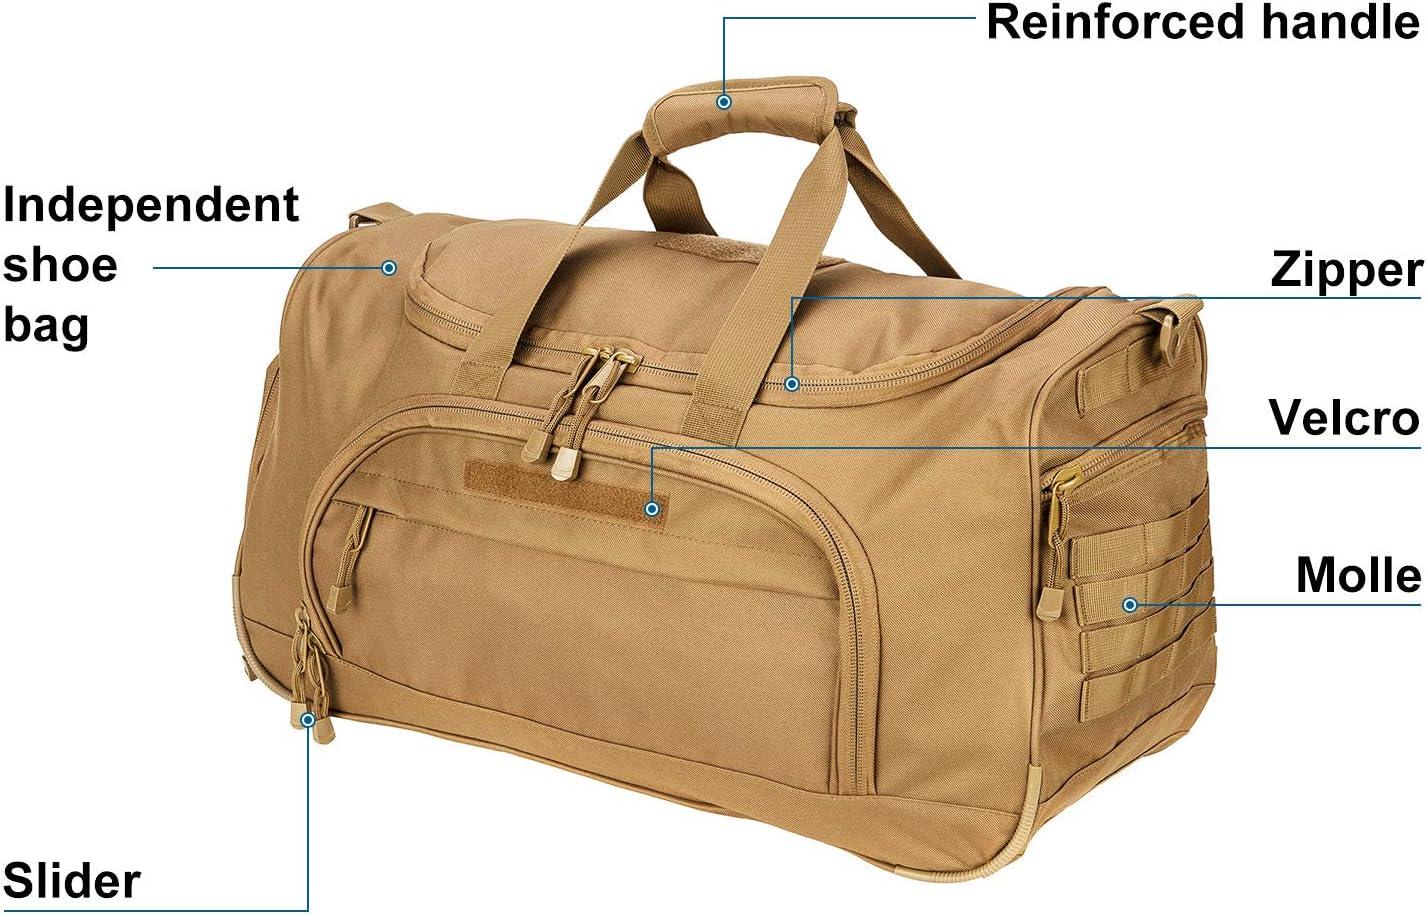 Large Military Duffle Bag, Waterproof Duffel Bag with